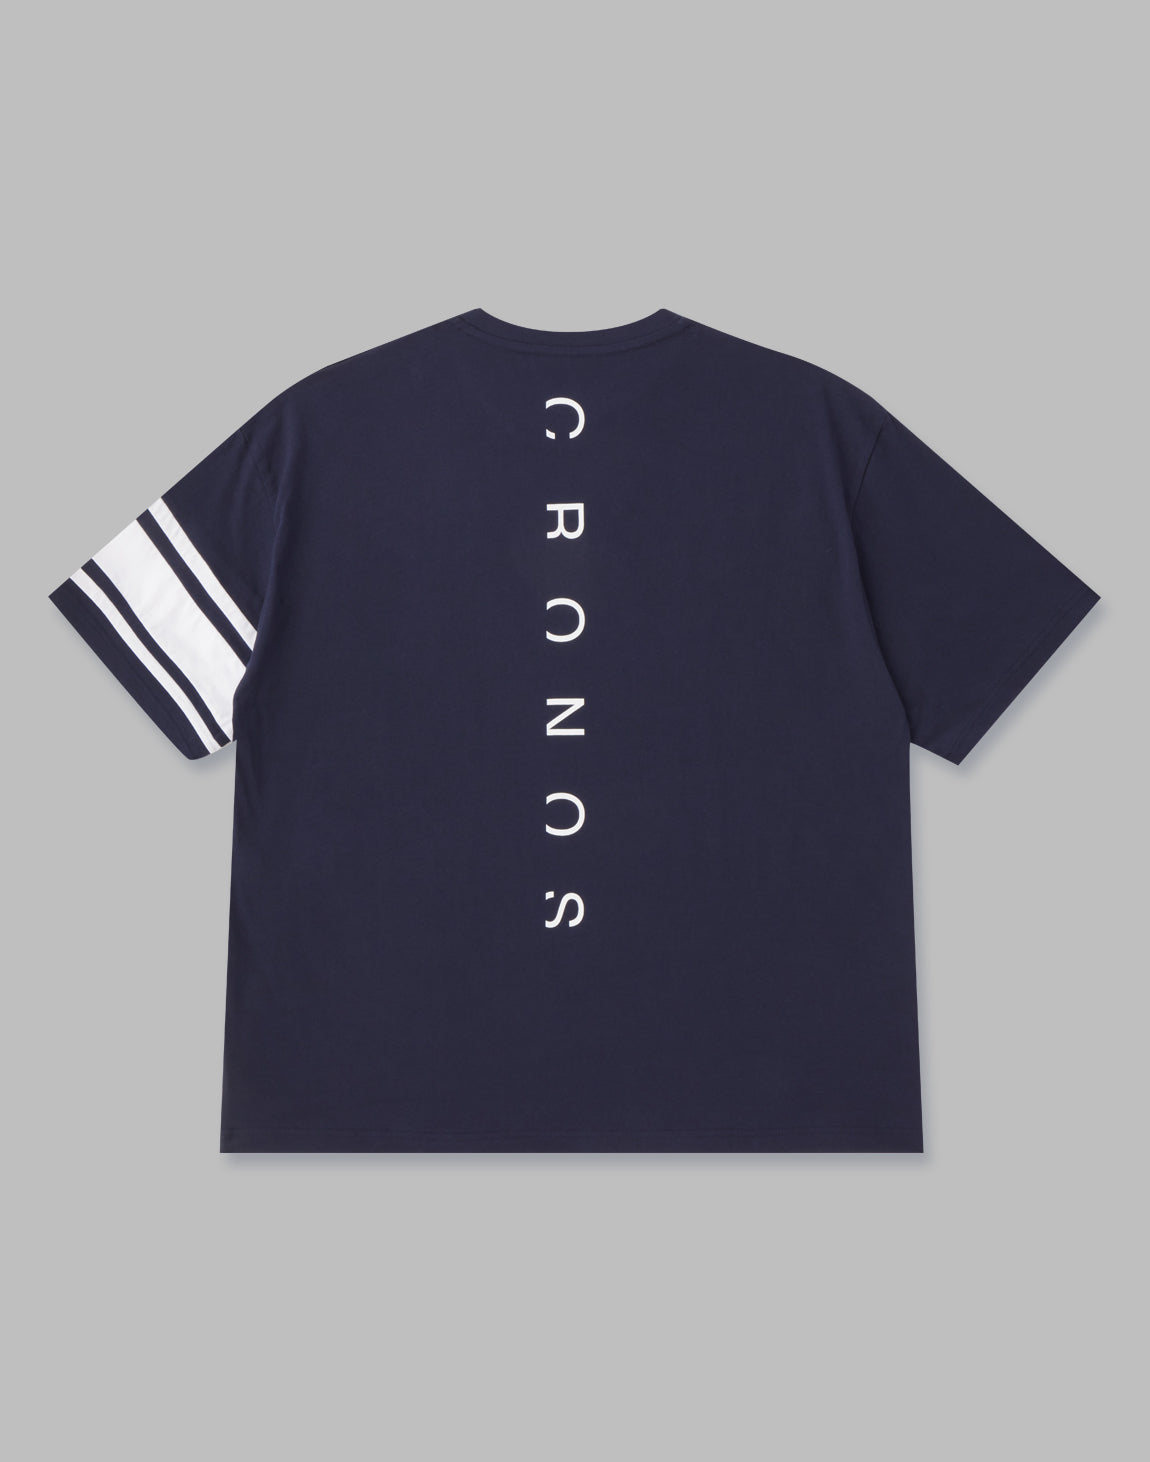 CRONOS BRASSARD OVERSIZE T-SHIRTS – クロノス CRONOS Official Store